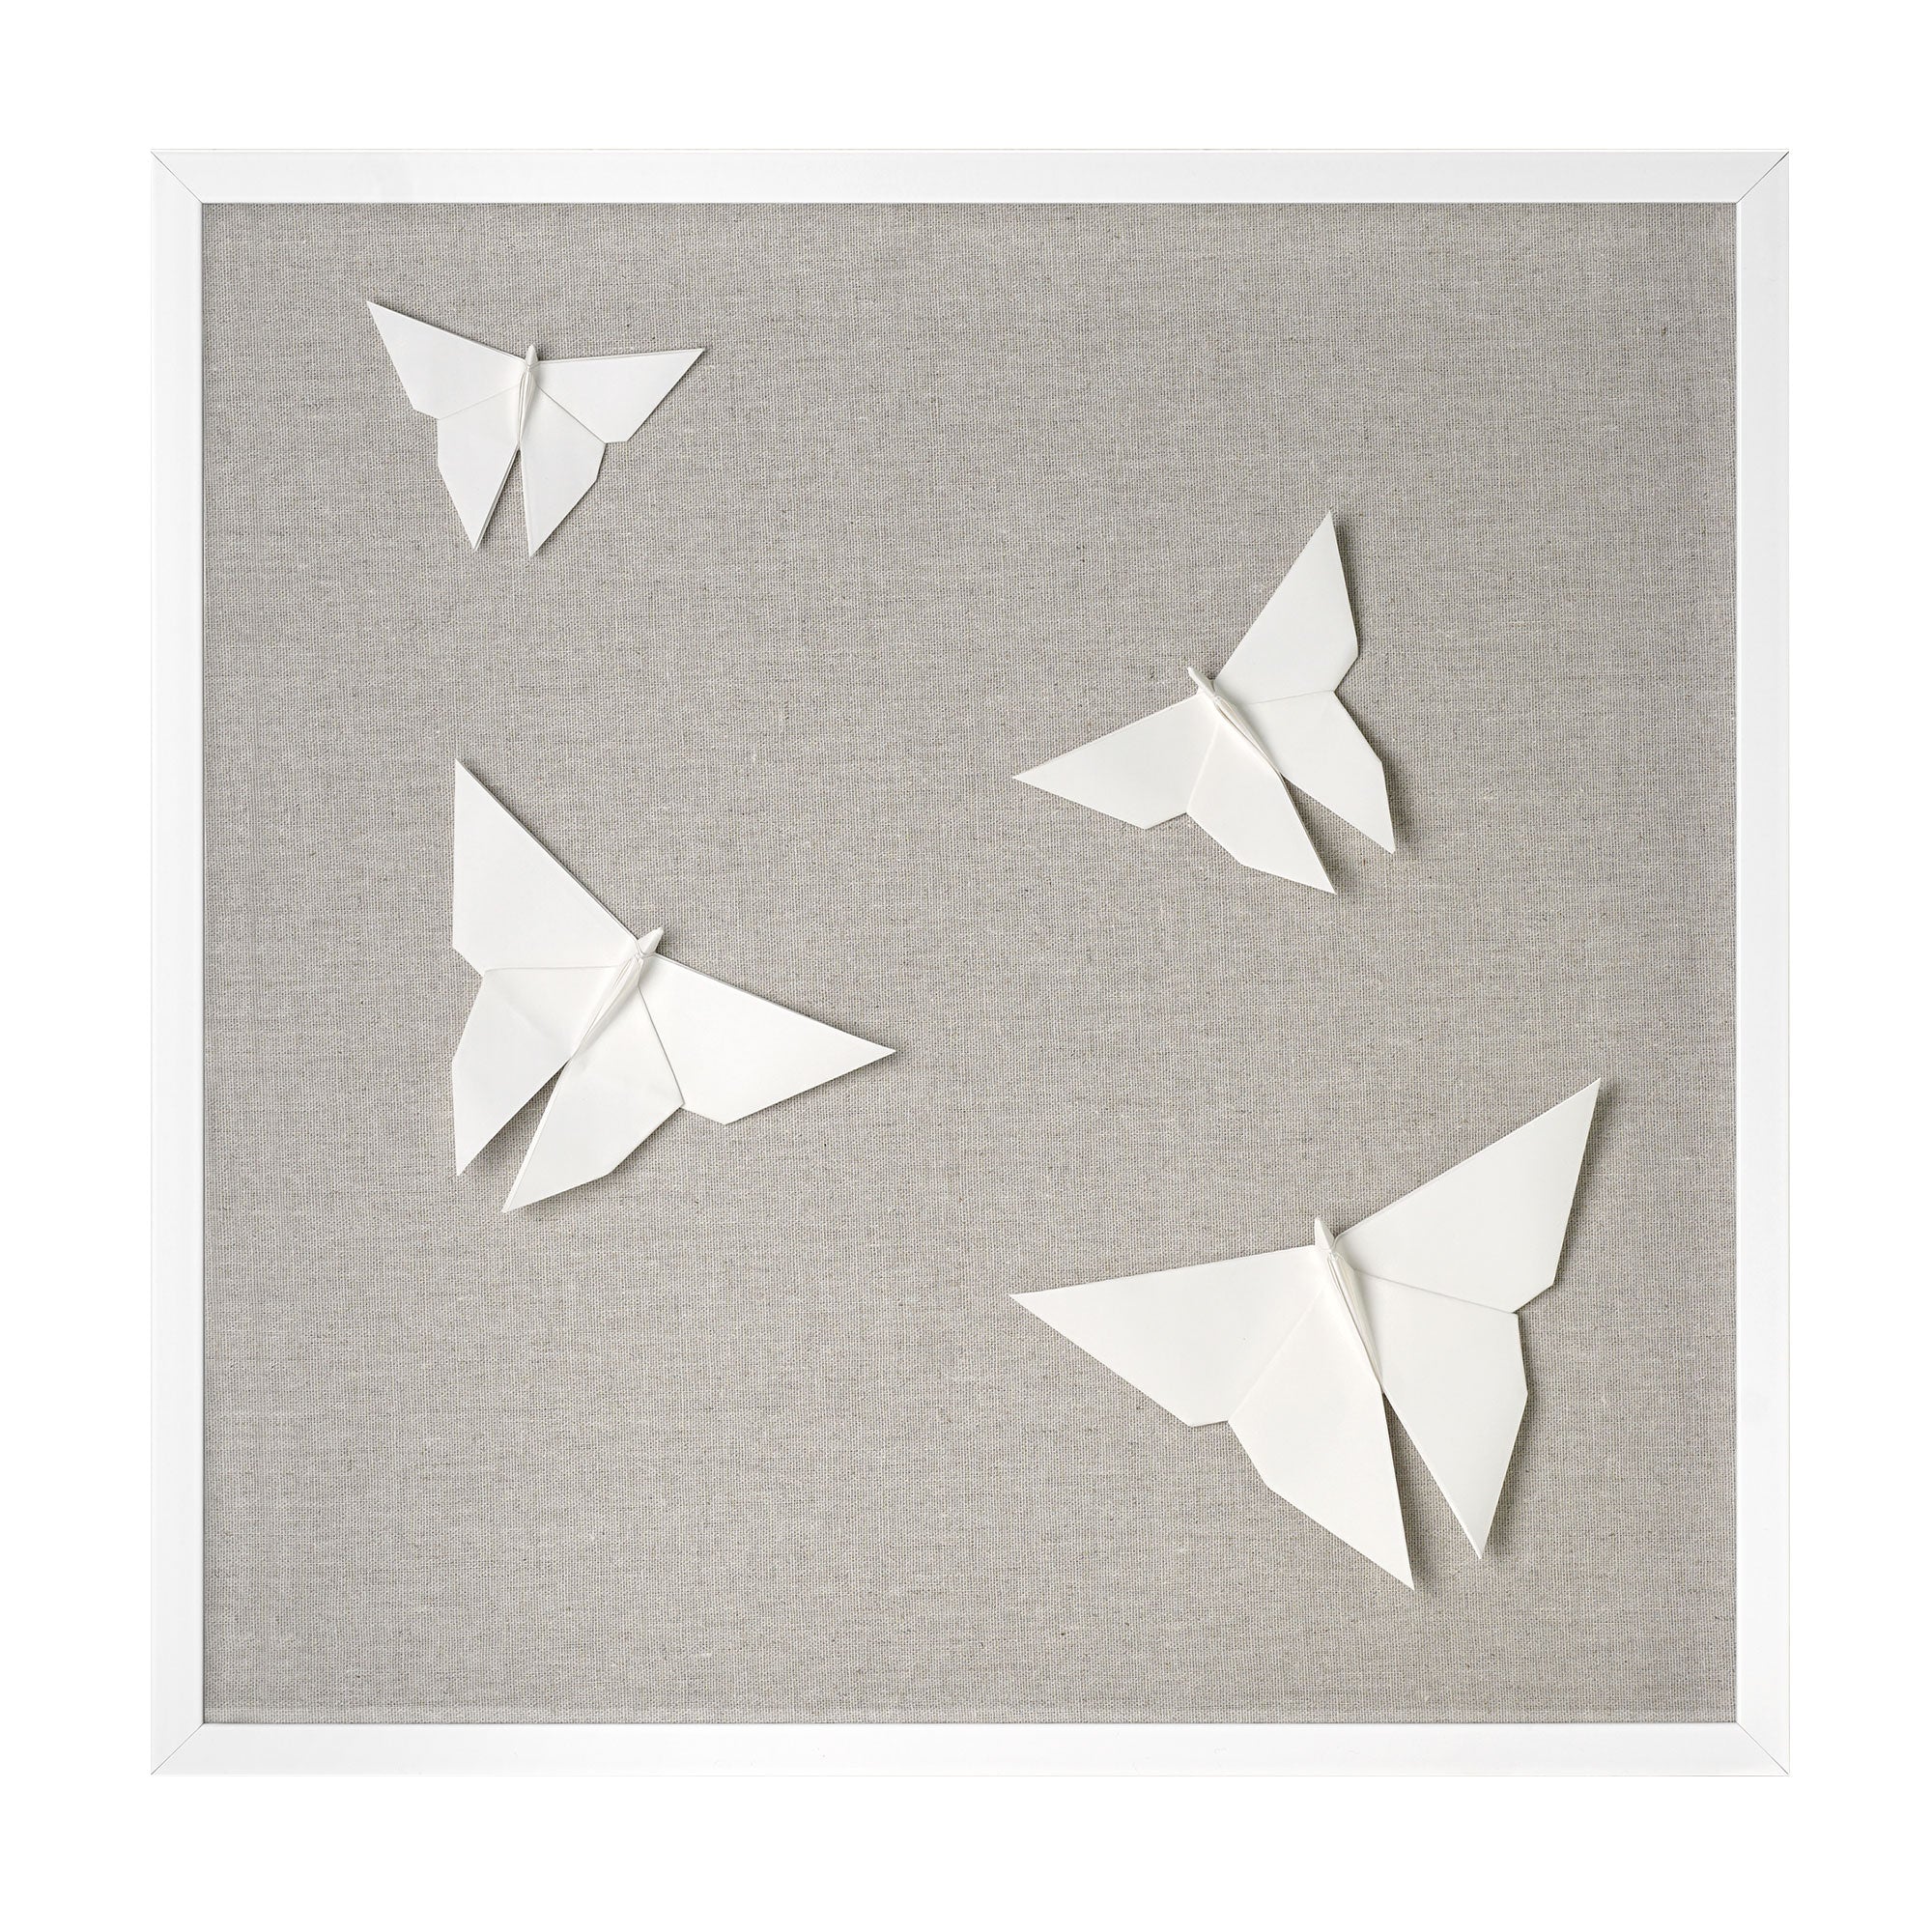 Frozen in Flight Paper and Linen Shadowbox Art